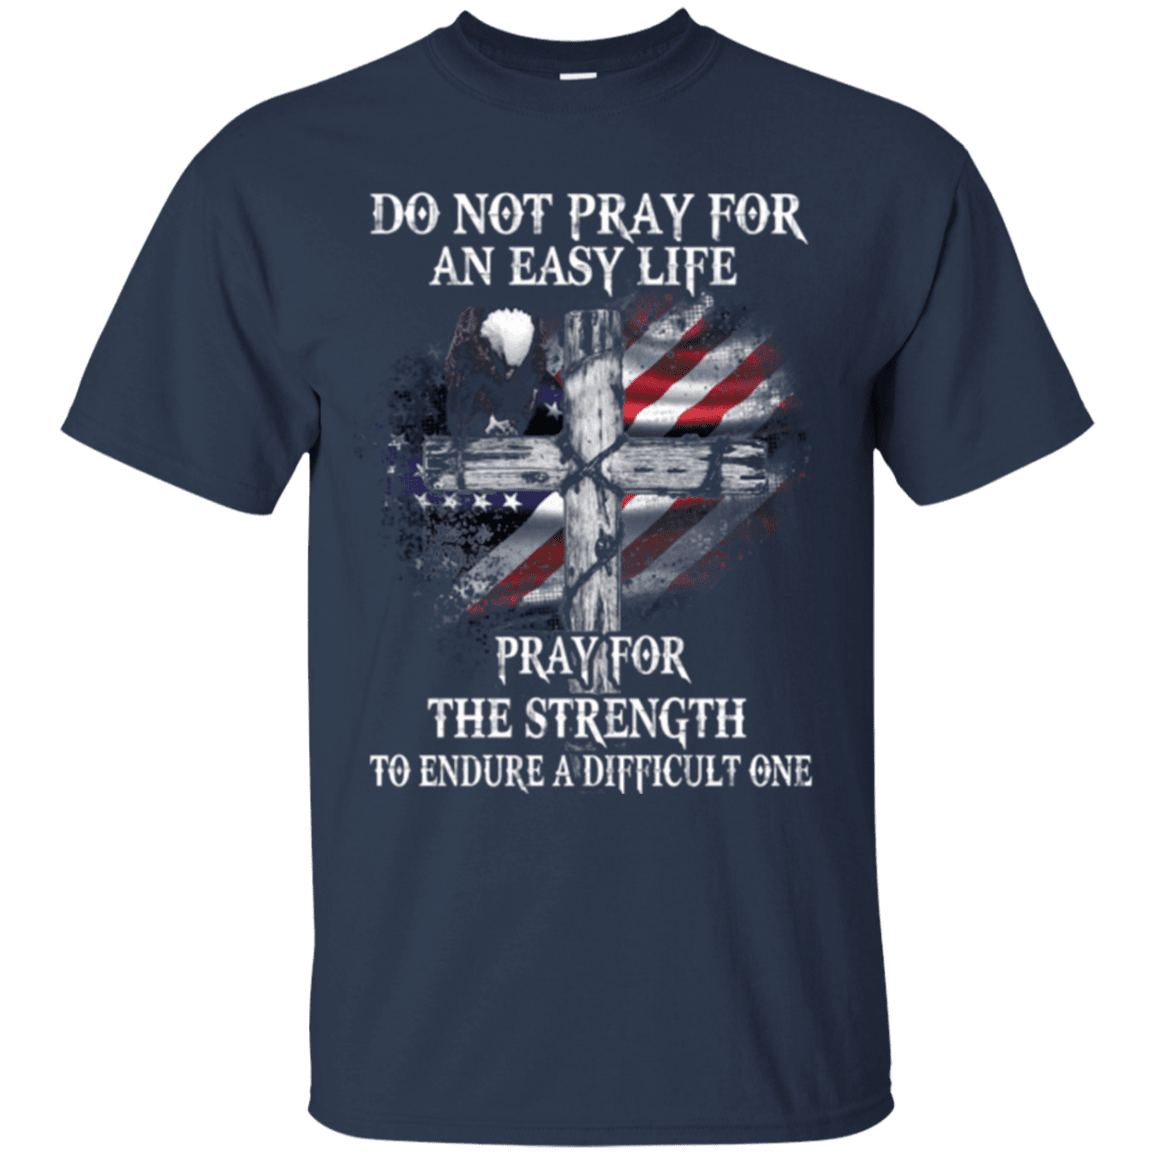 Military T-Shirt "Veteran Pray"-TShirt-General-Veterans Nation